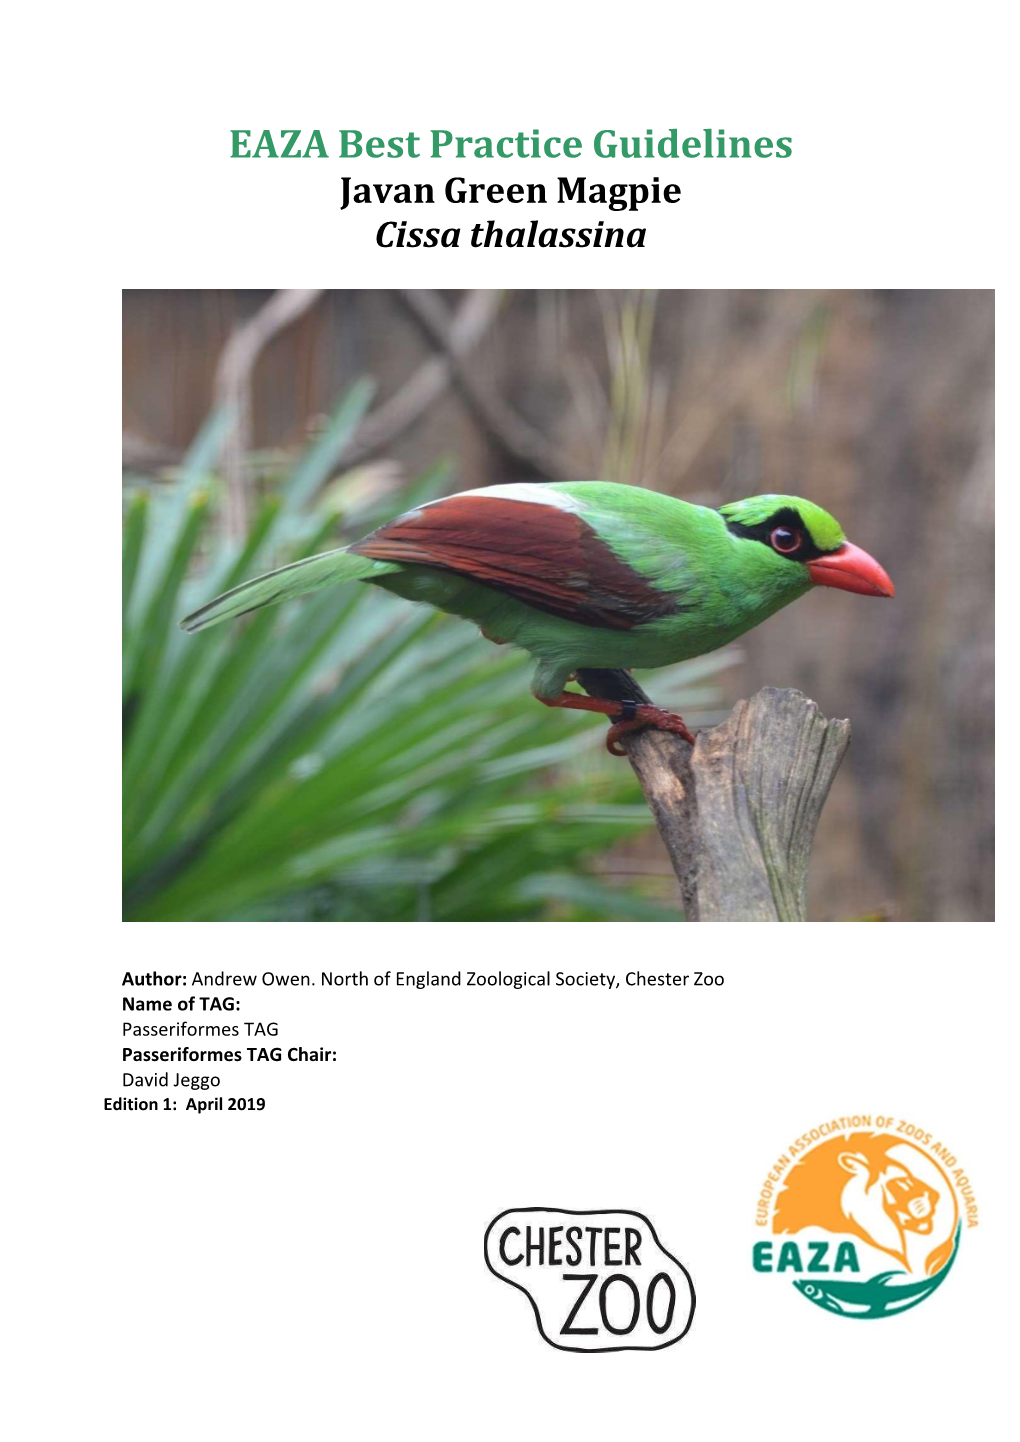 Javan Green Magpie (Cissa Thalassina)